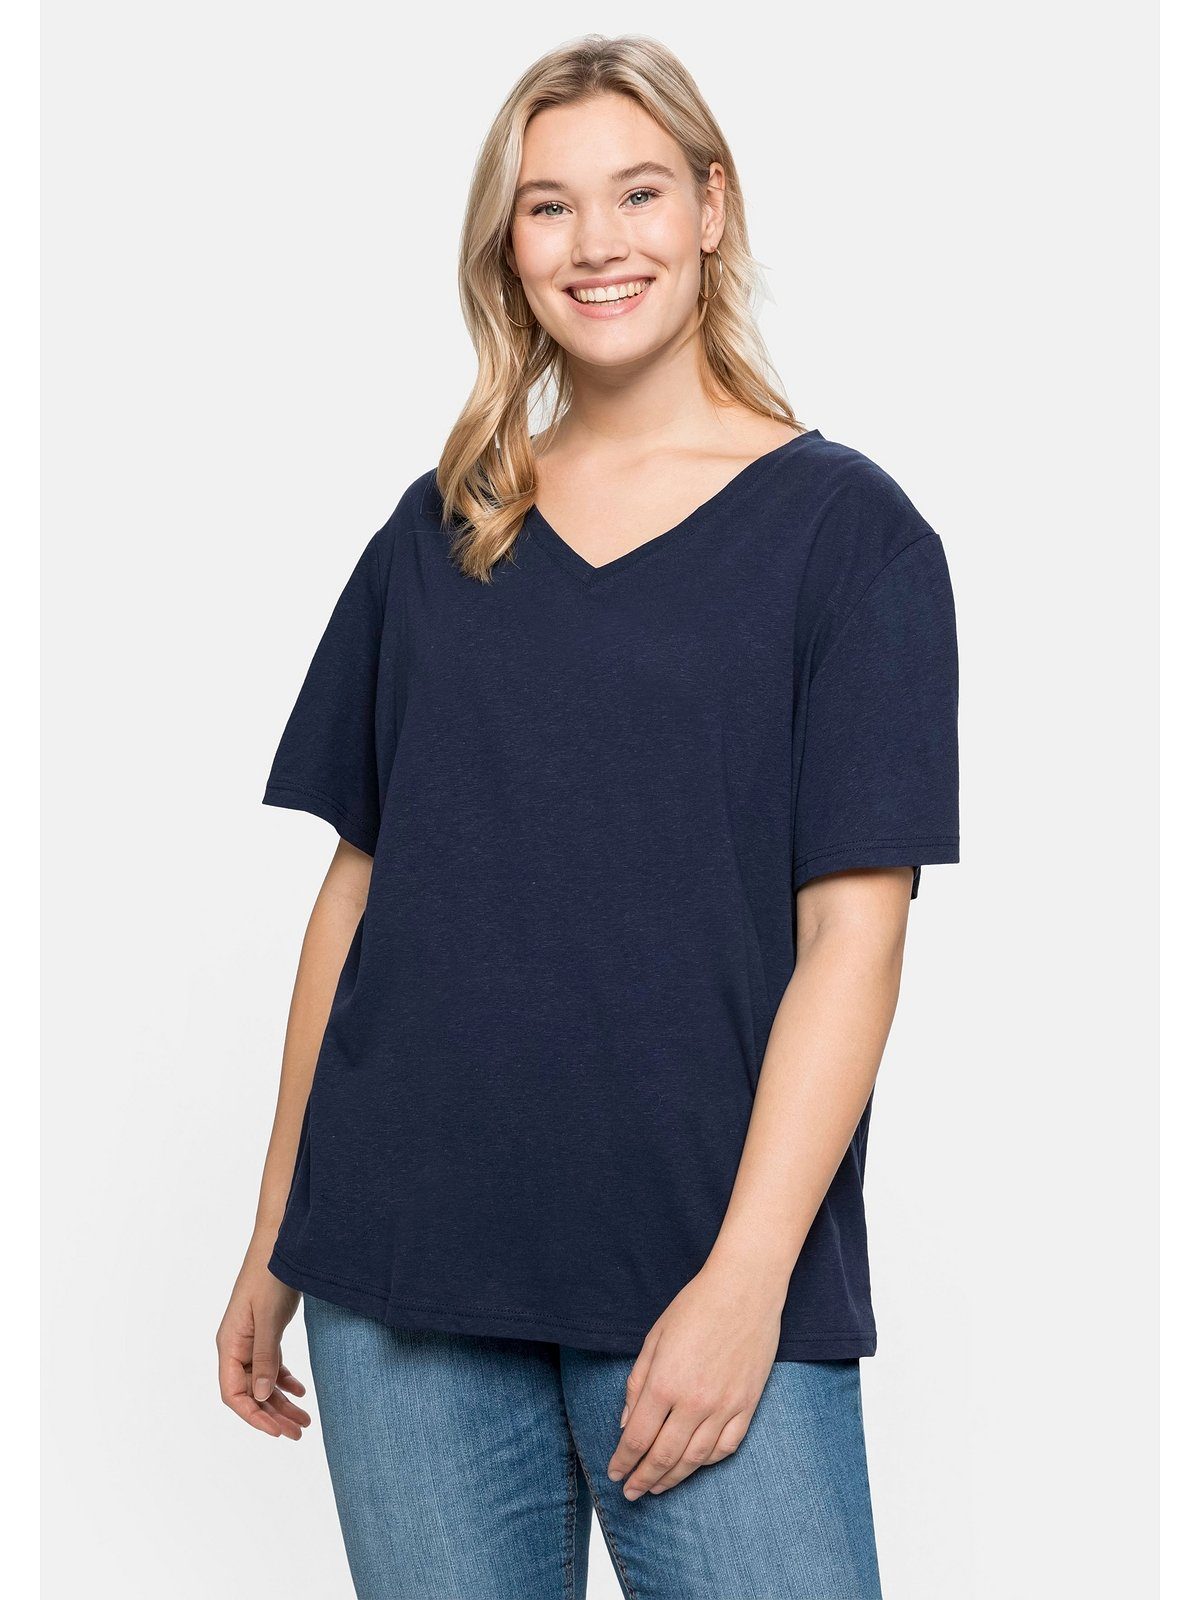 Sheego T-Shirt Große Größen aus edlem Leinen-Viskose-Mix marine | V-Shirts